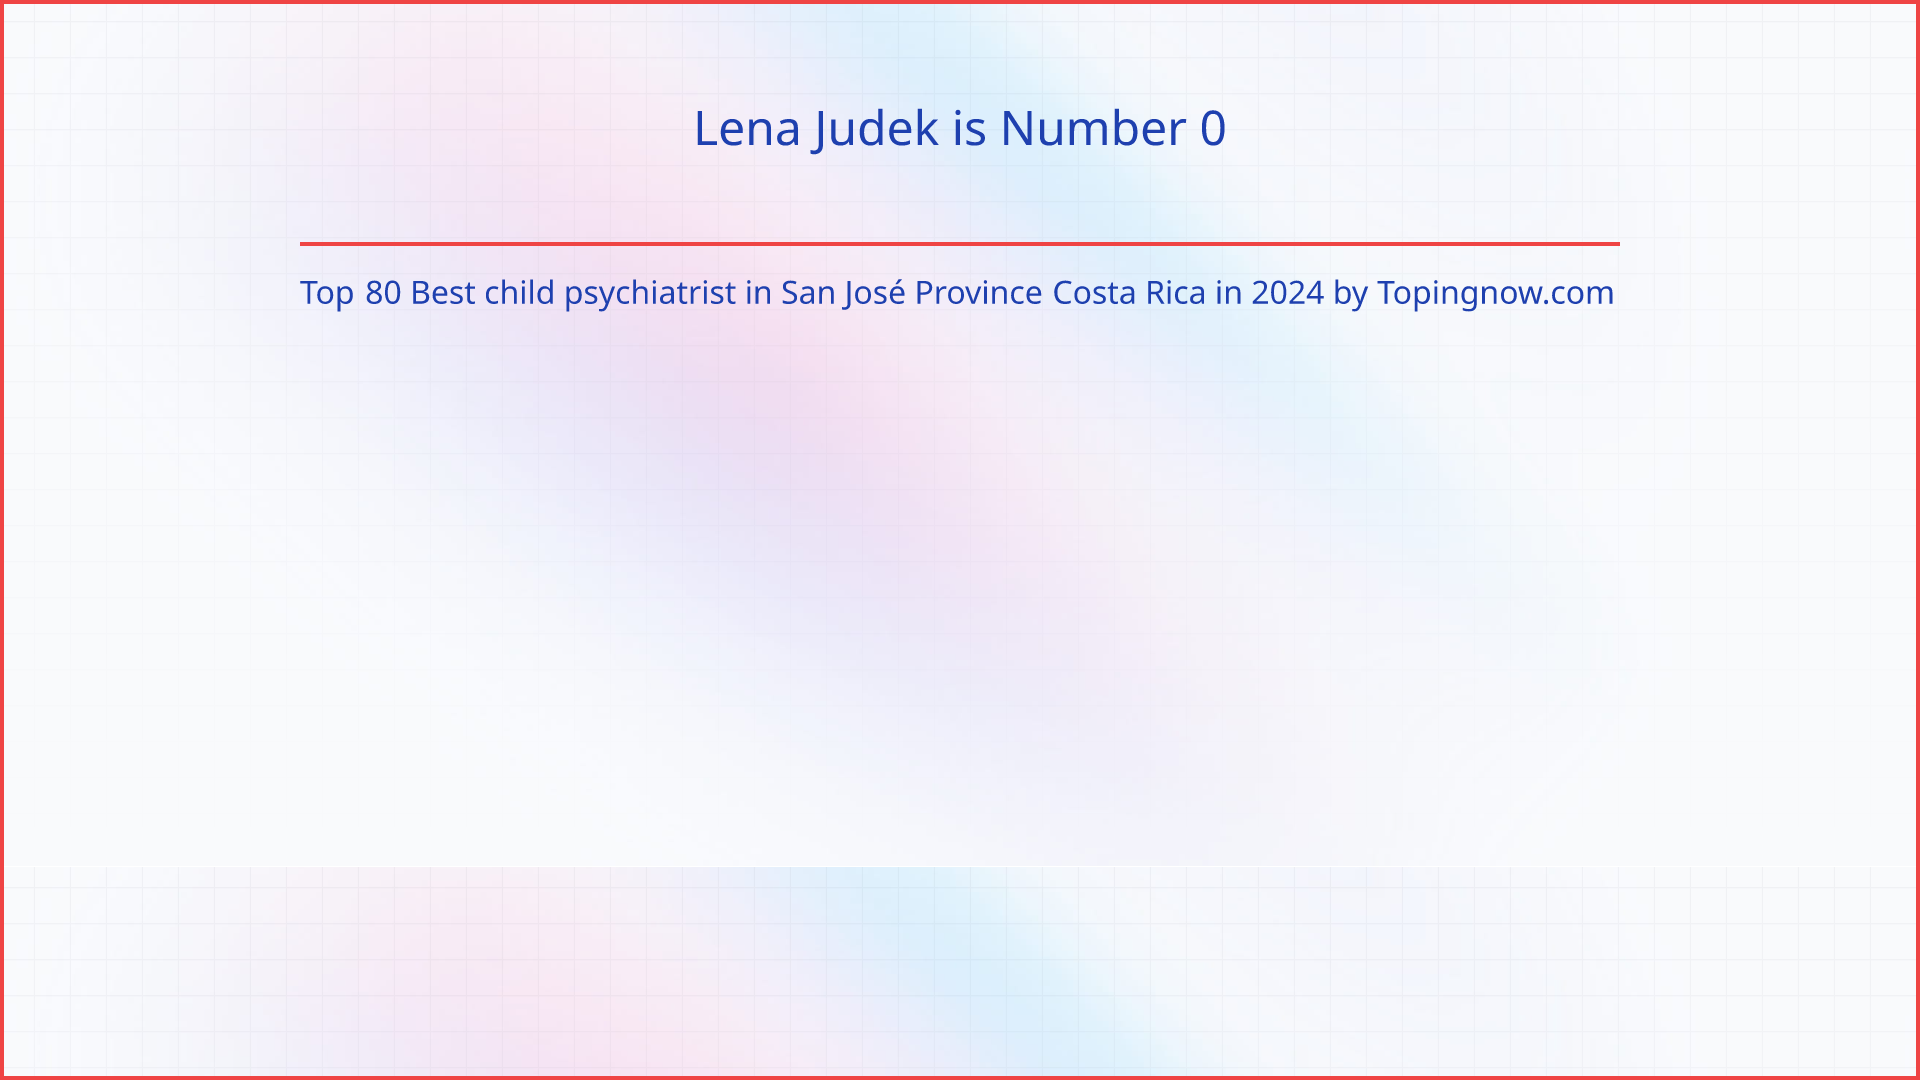 Lena Judek: Top 80 Best child psychiatrist in San José Province Costa Rica in 2024